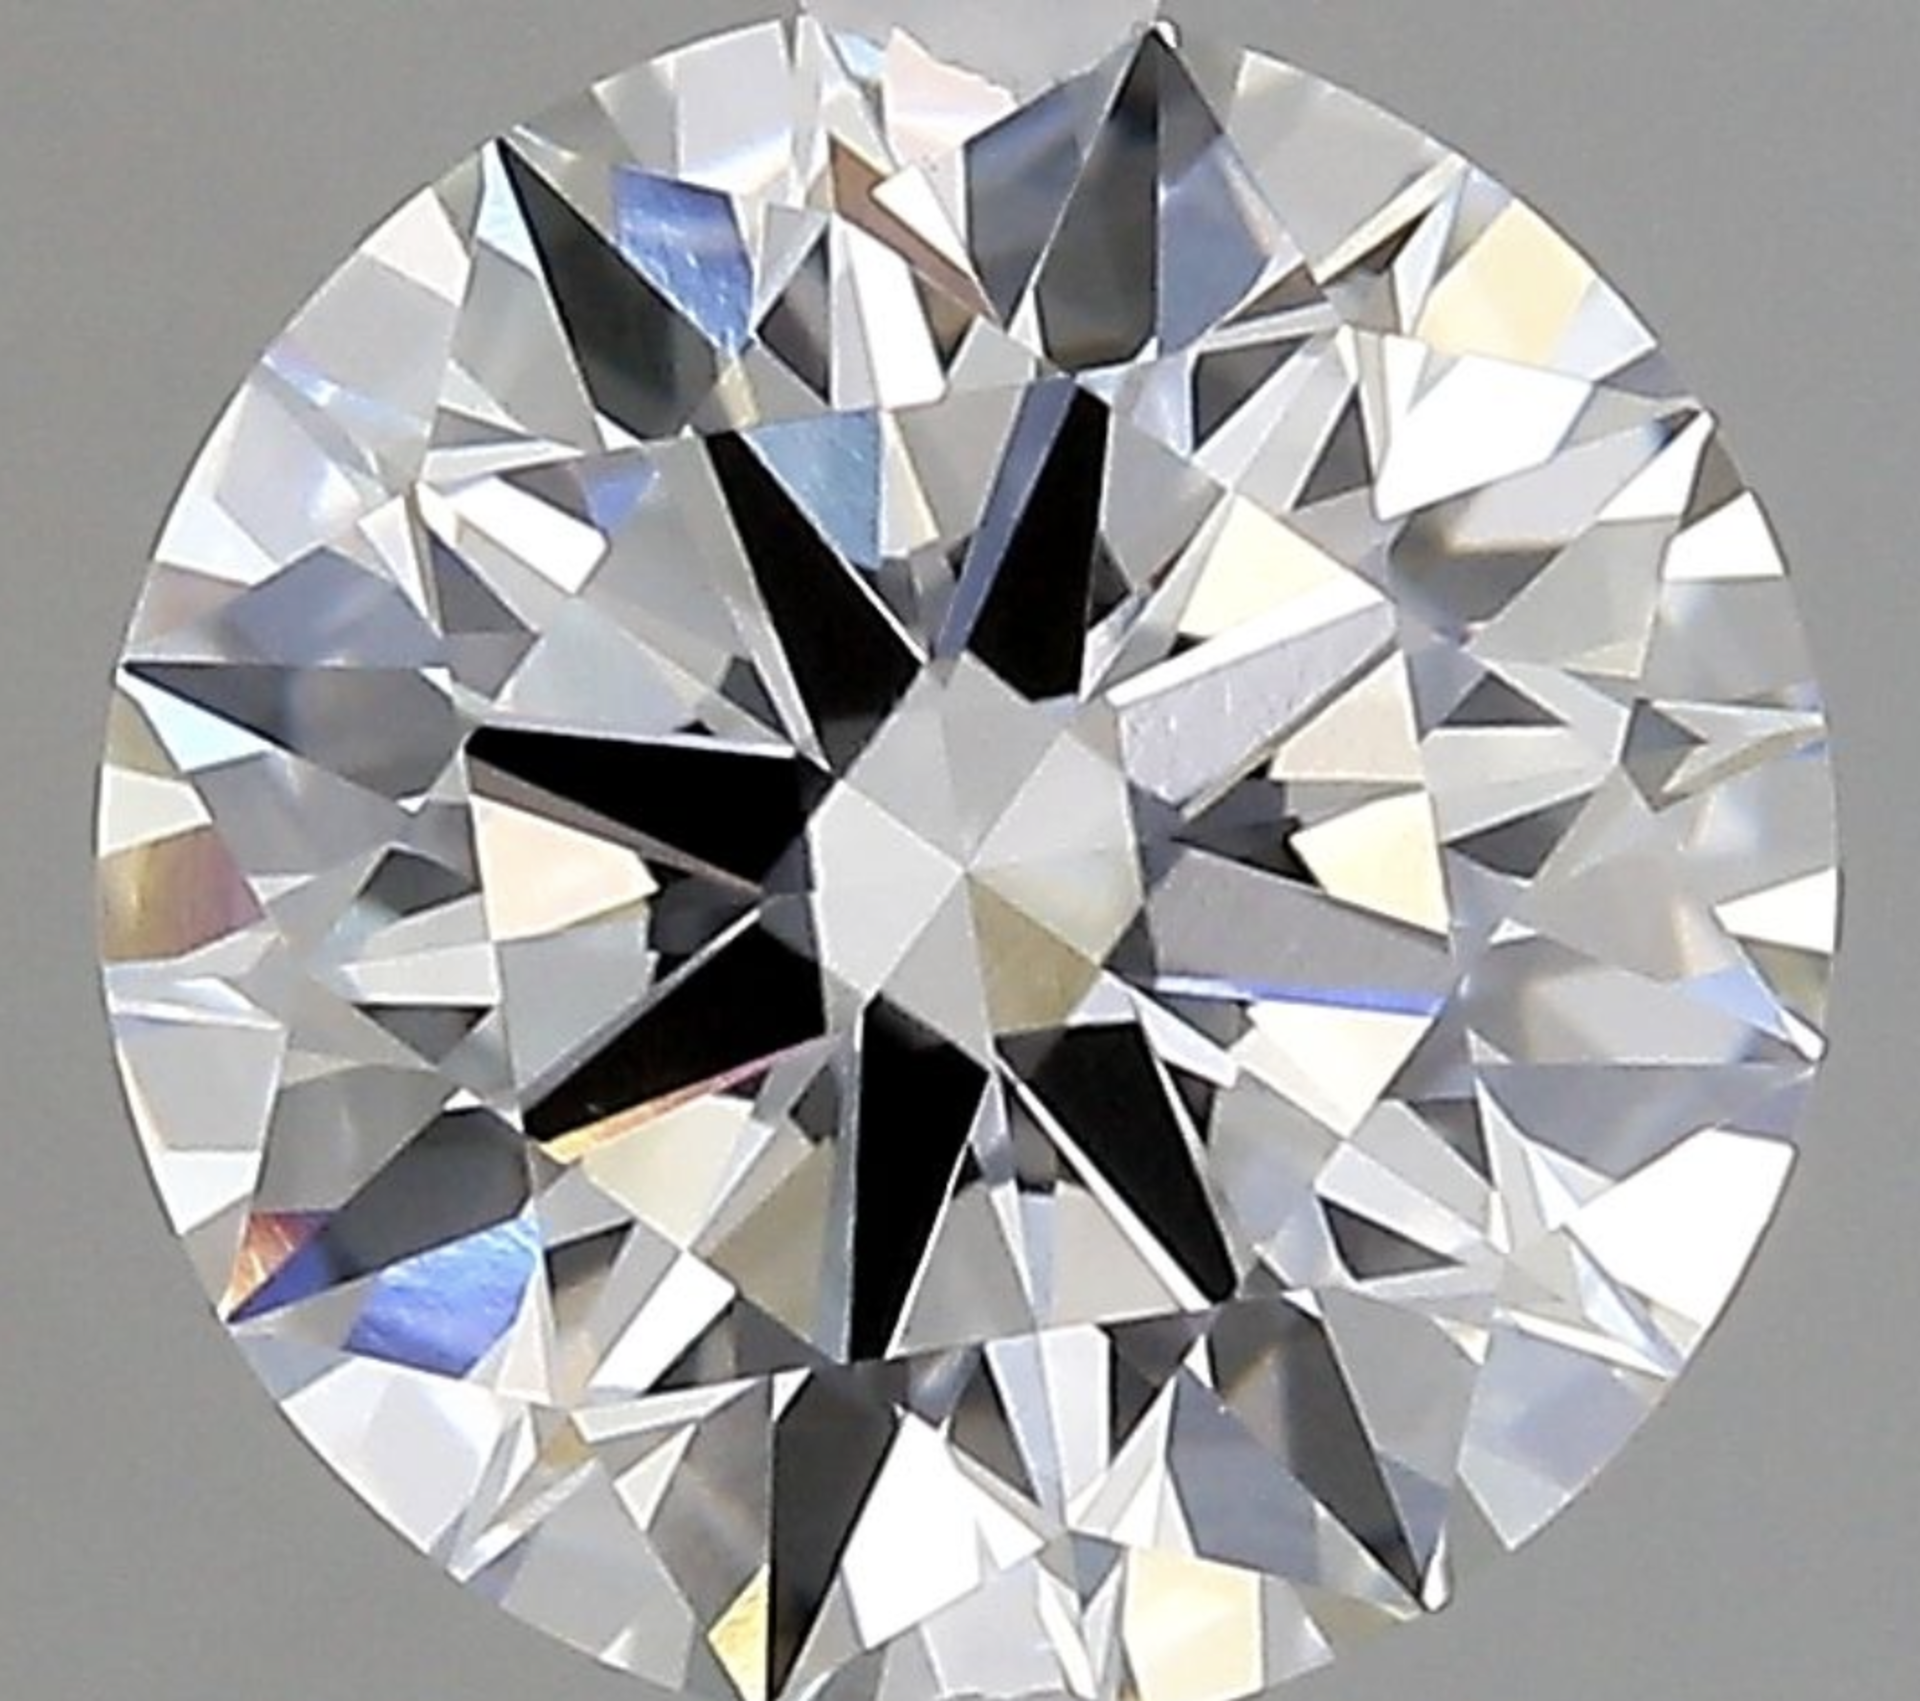 Single - GIA Round Brilliant Cut Diamond F Colour VVS2 Clarity 2.13 Carat - 7441888947